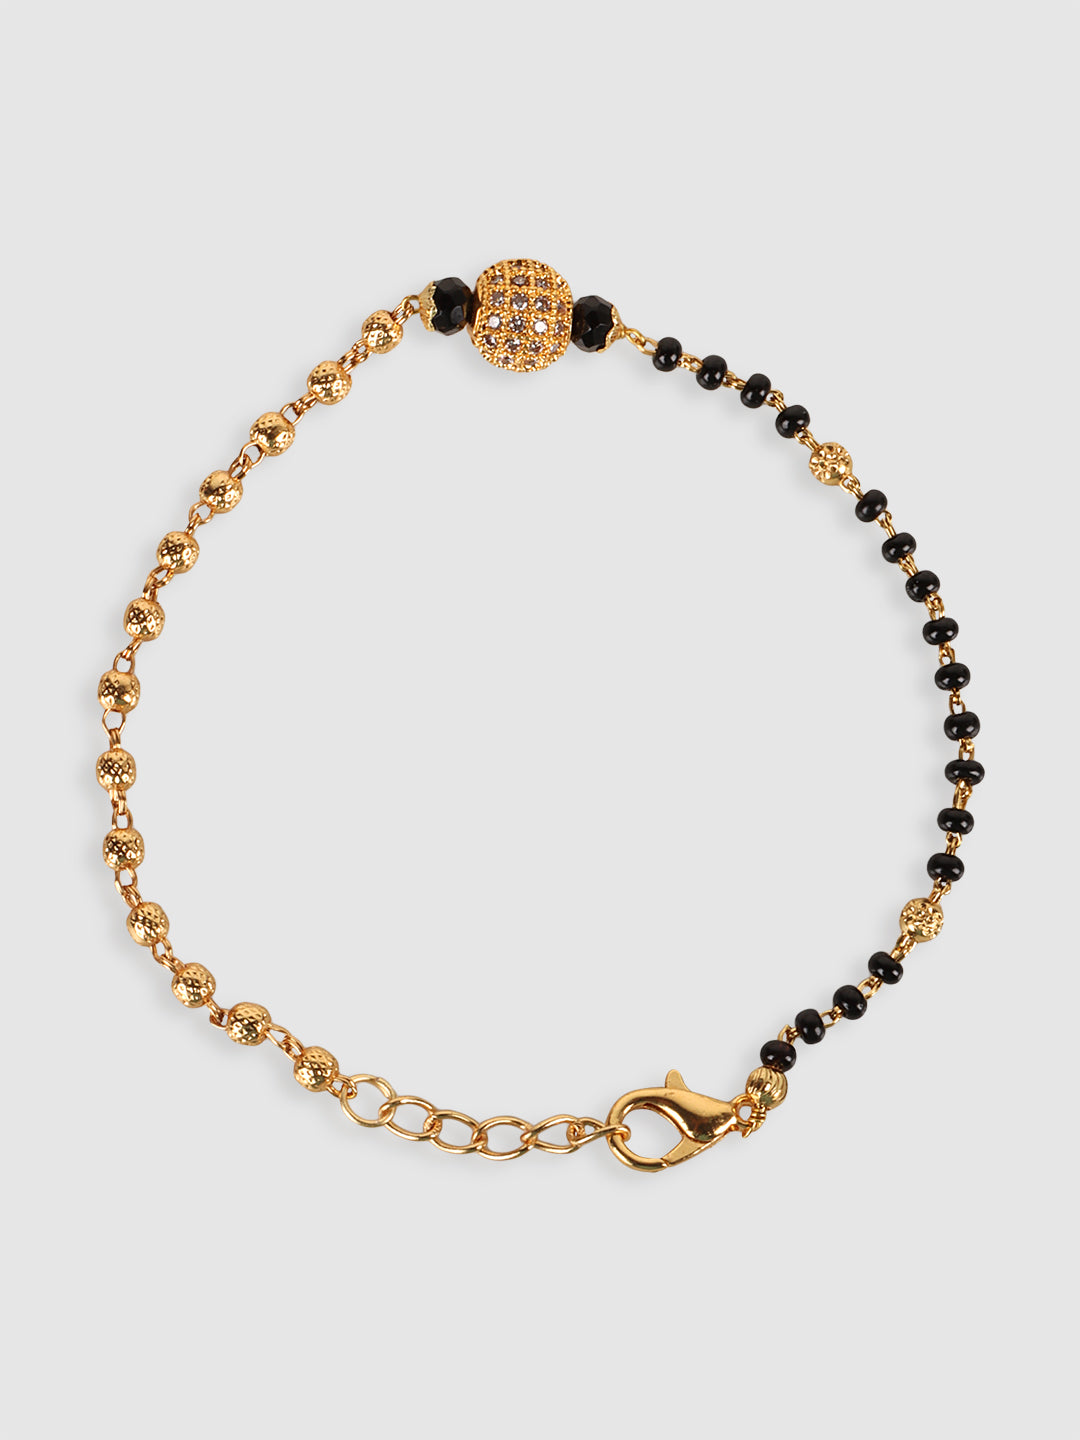 Handmade Imitation Kundan and Pearl Hath Phool Bracelet for Women (One  Pair) – Gifts and Fashion